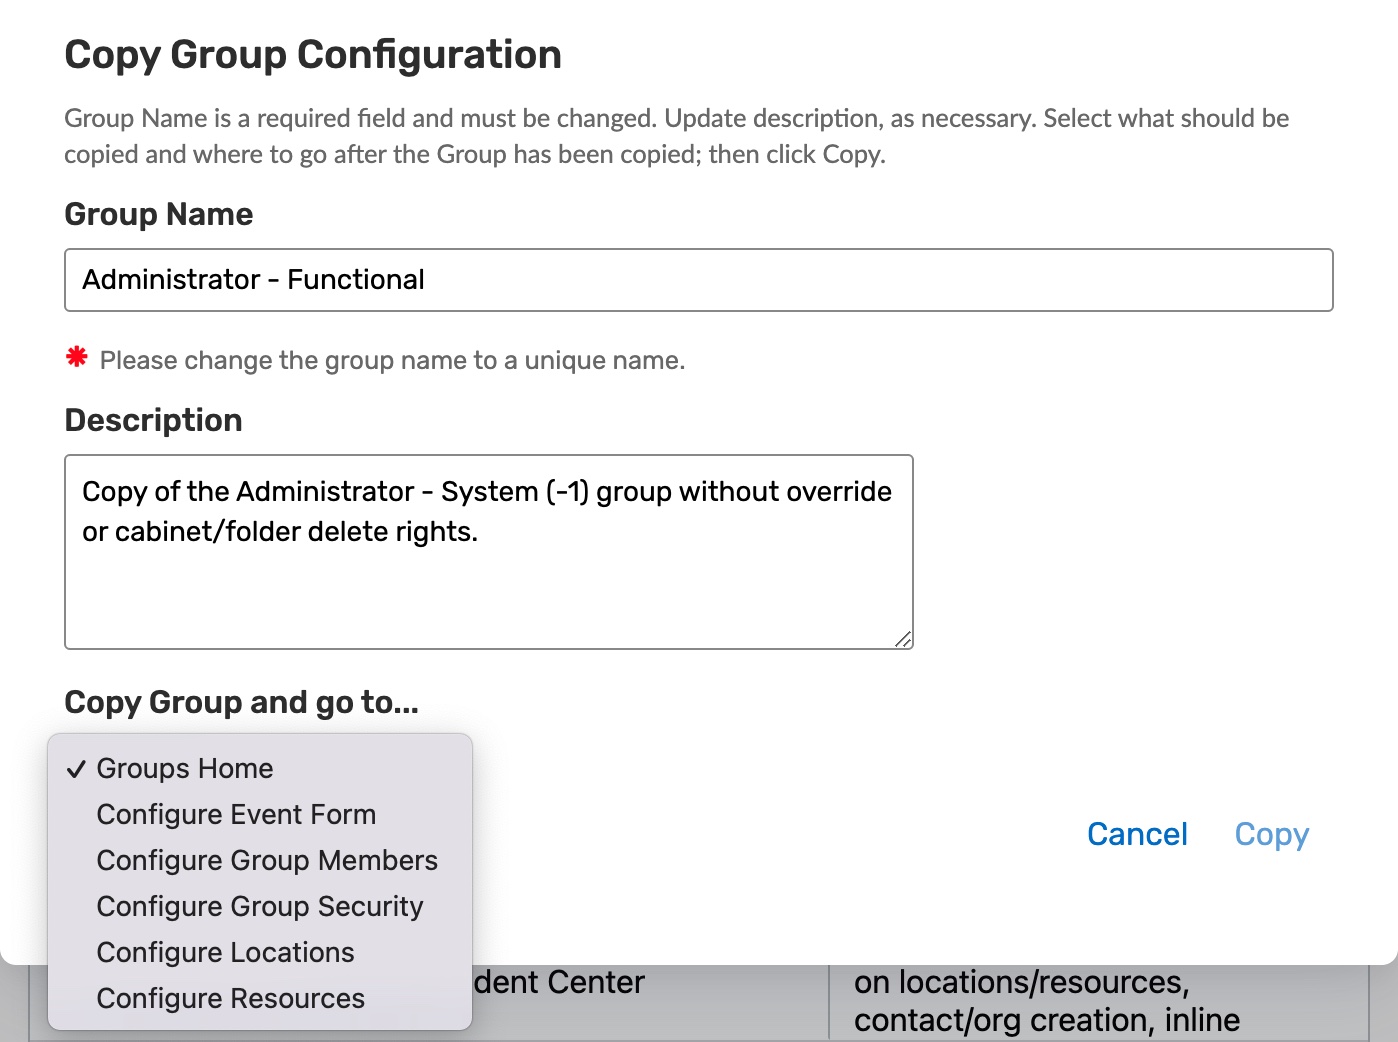 Copy Group Configuration options